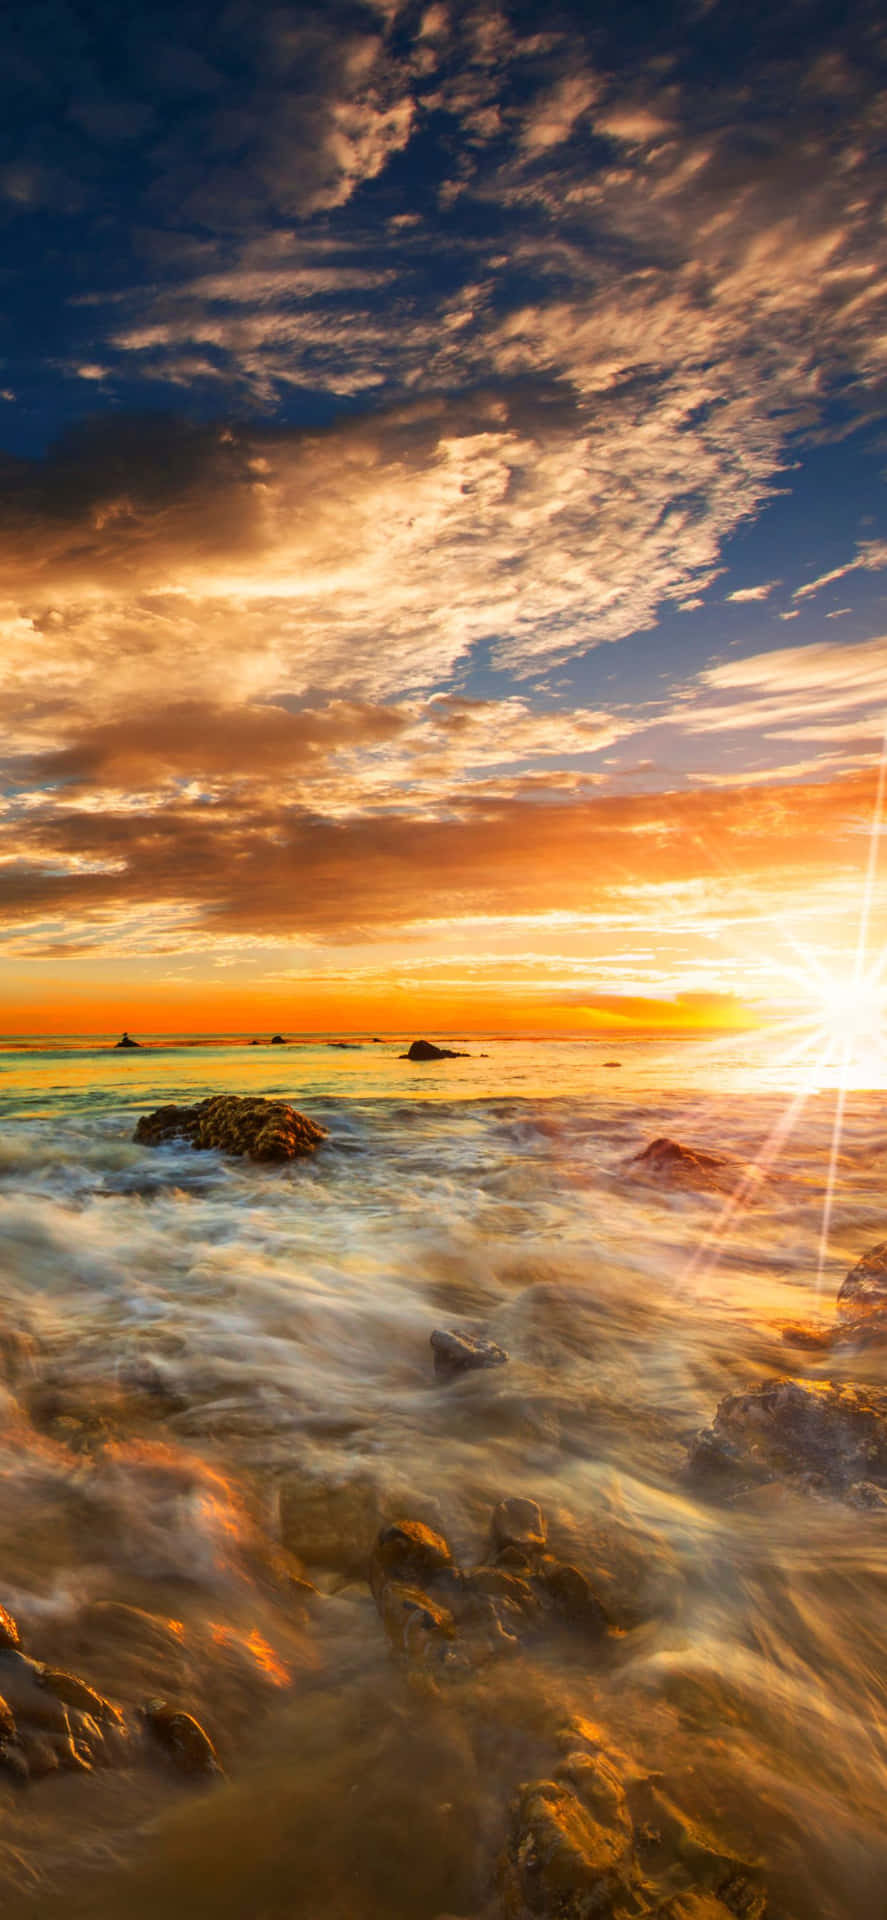 Iphone Xs Max Malibu Sun Setting By The Waves Background